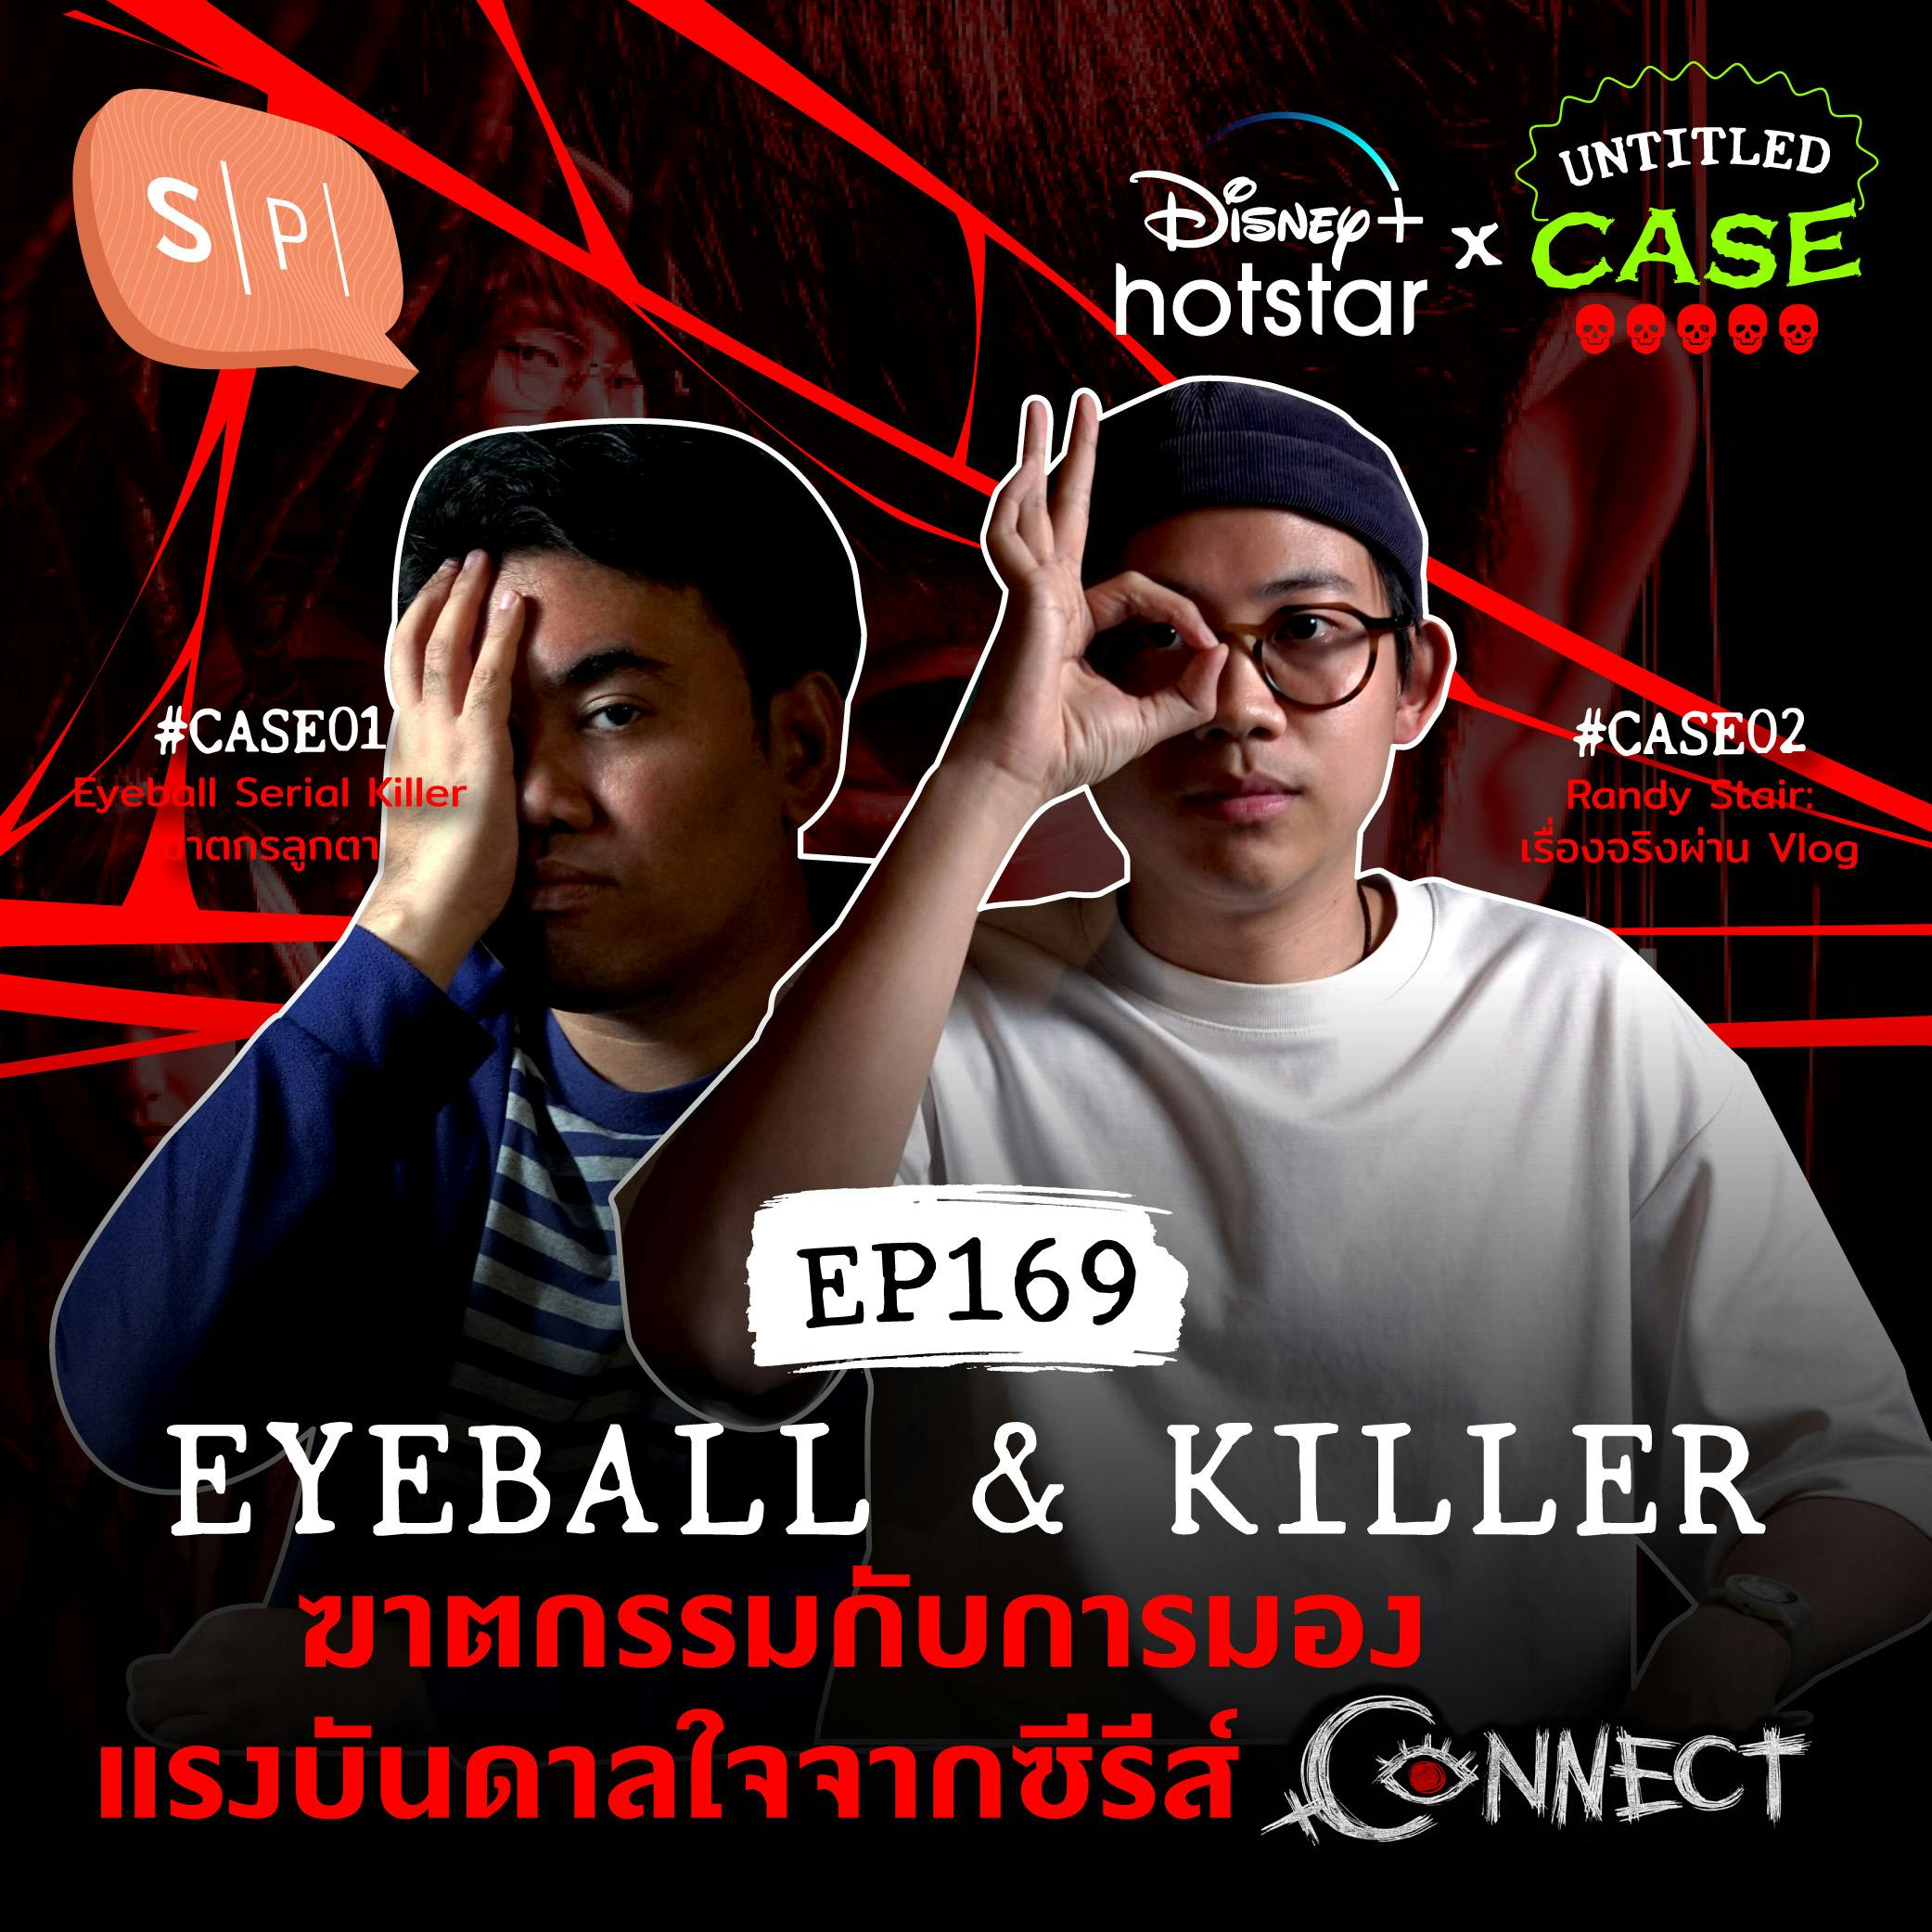 Eyeball & Killer ฆาตกรรมกับการมอง แรงบันดาลใจจากซีรีส์ Connect | Untitled Case EP169